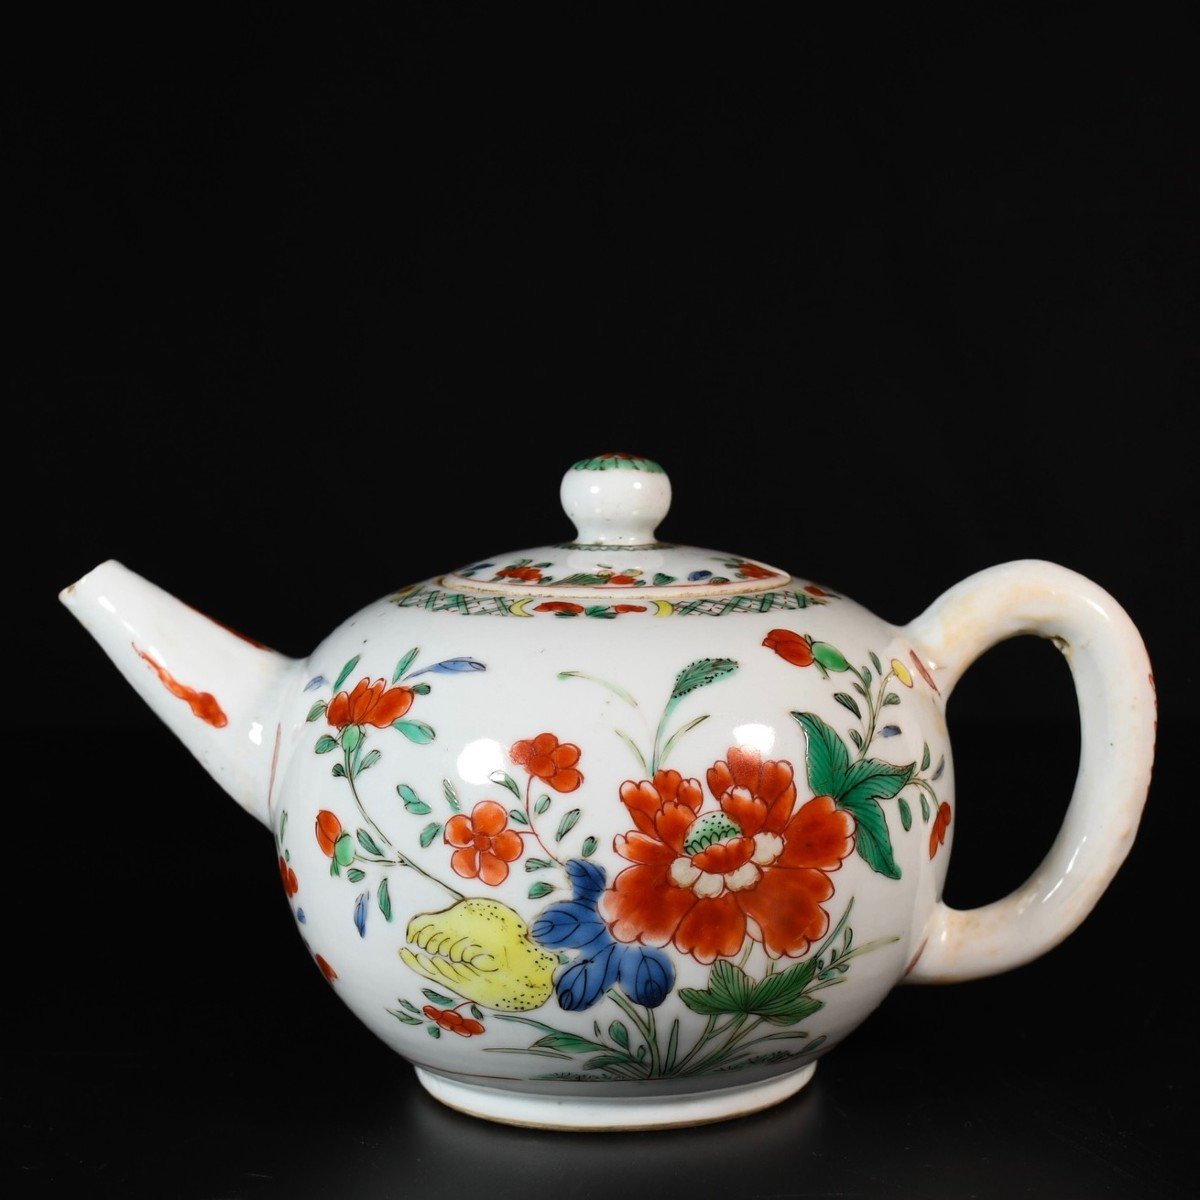 Large Porcelain Teapot With Famille Verte Enamels - China 18th Century Kangxi Period